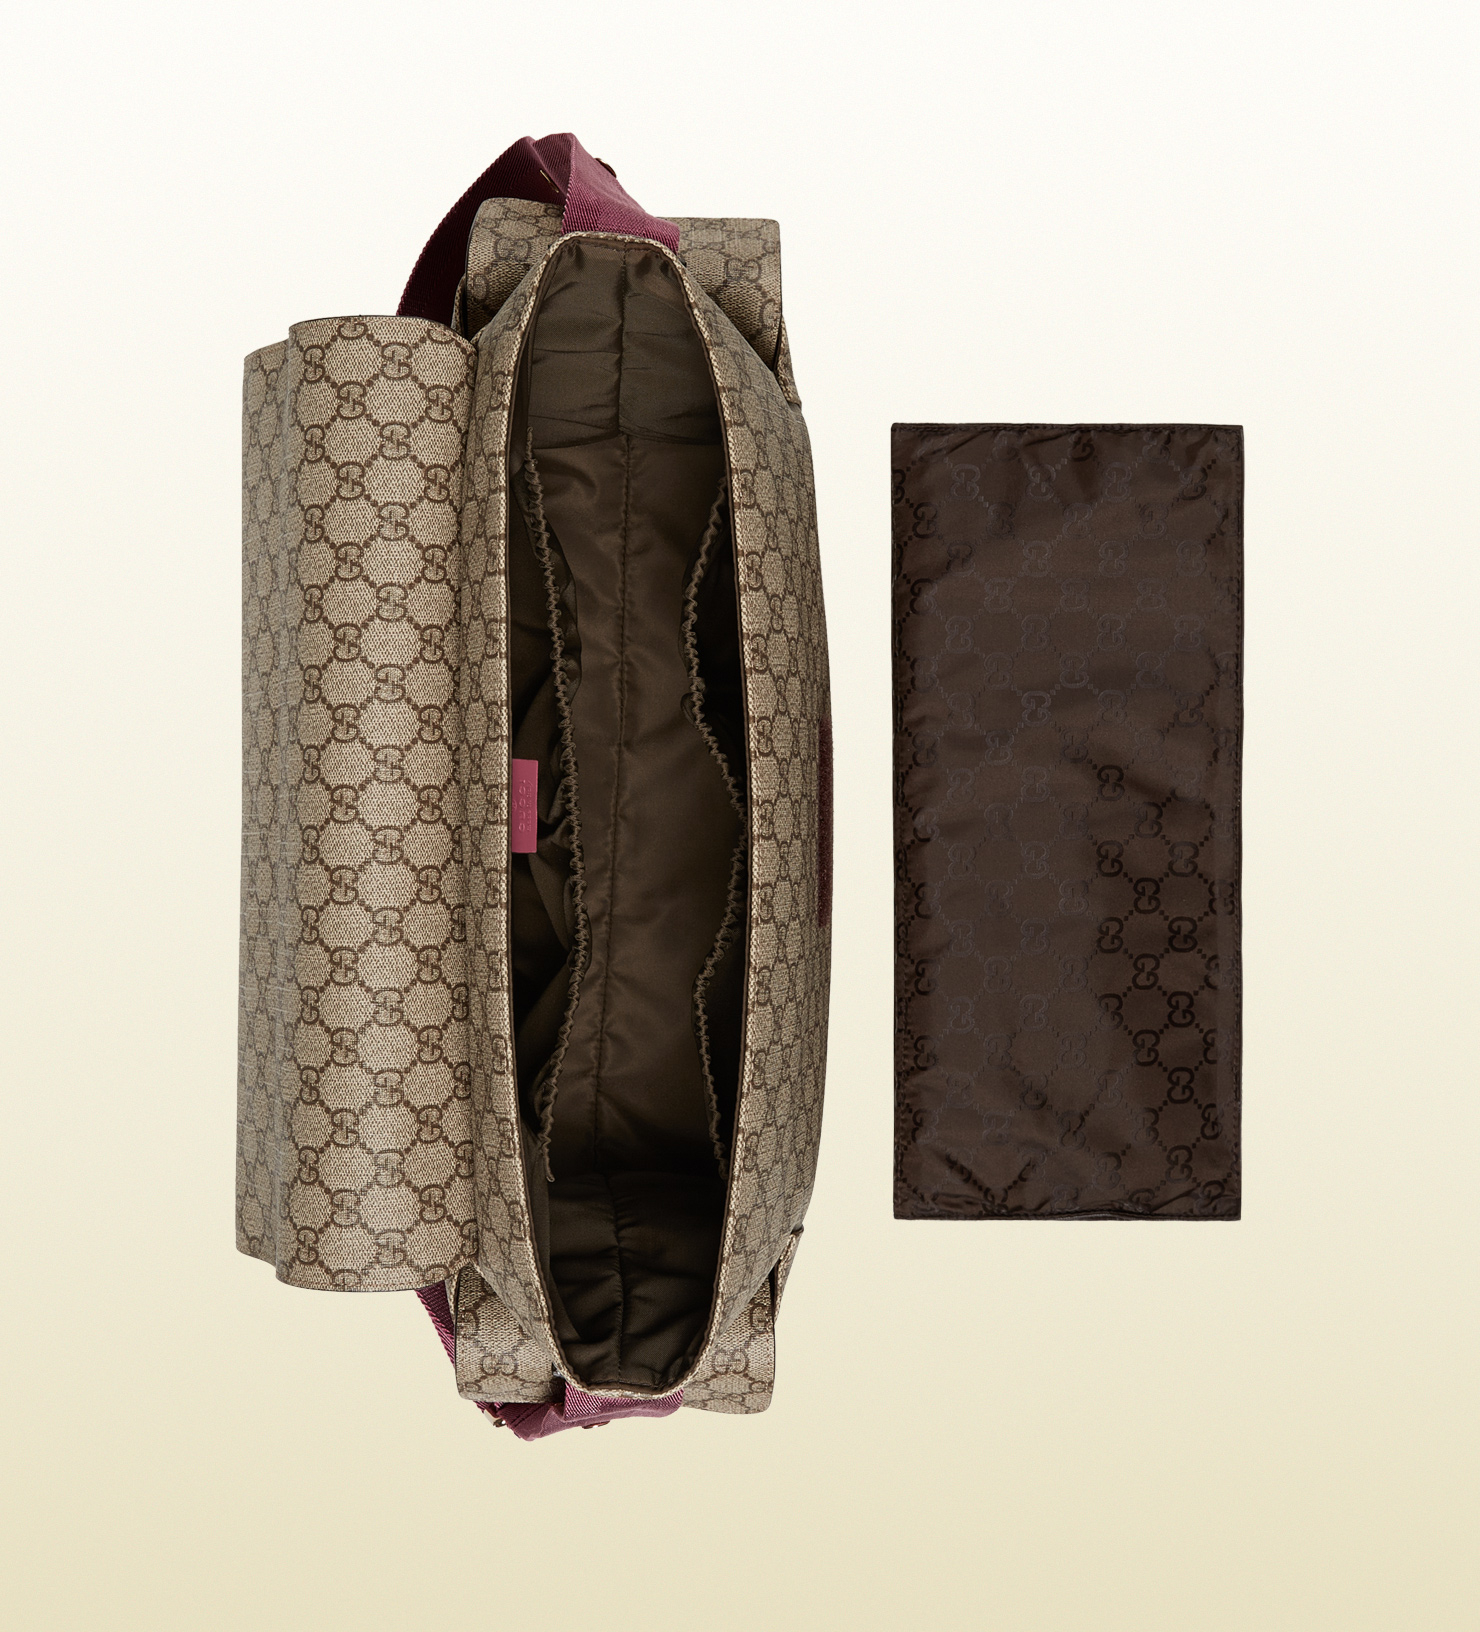 Lyst - Gucci Gg Supreme Canvas Diaper Bag in Natural